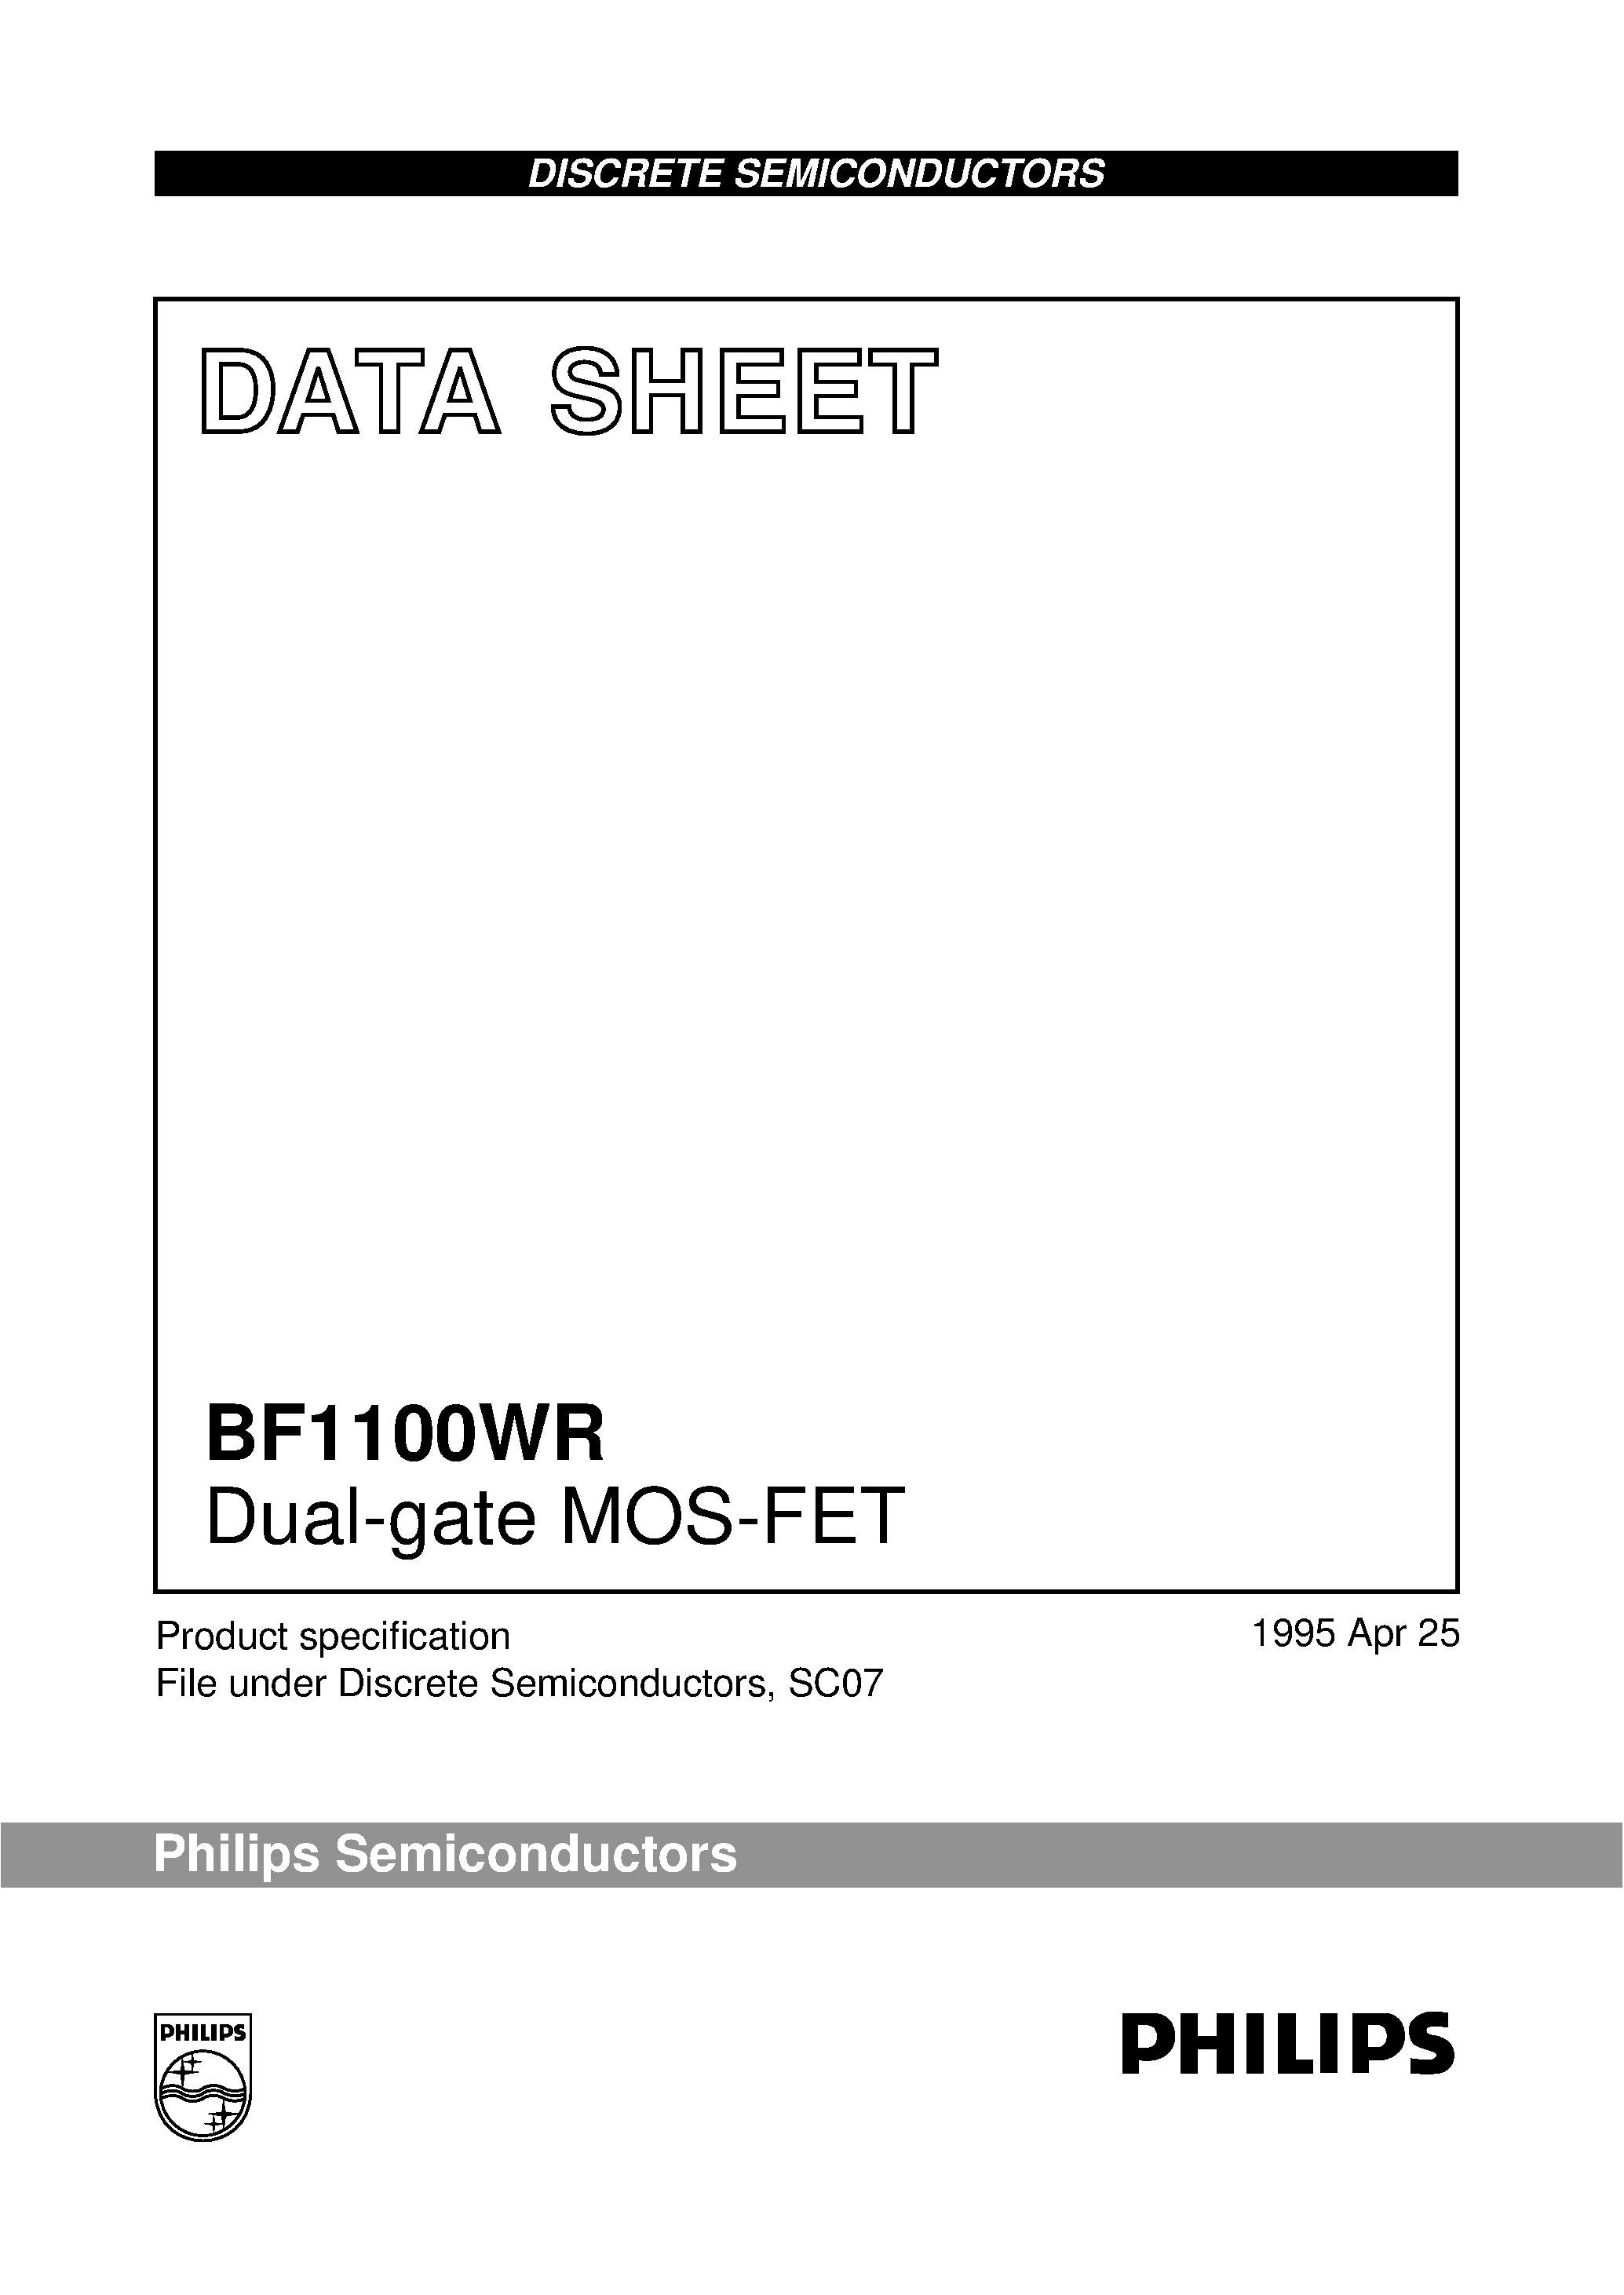 Даташит BF1100WR - Dual-gate MOS-FET страница 1